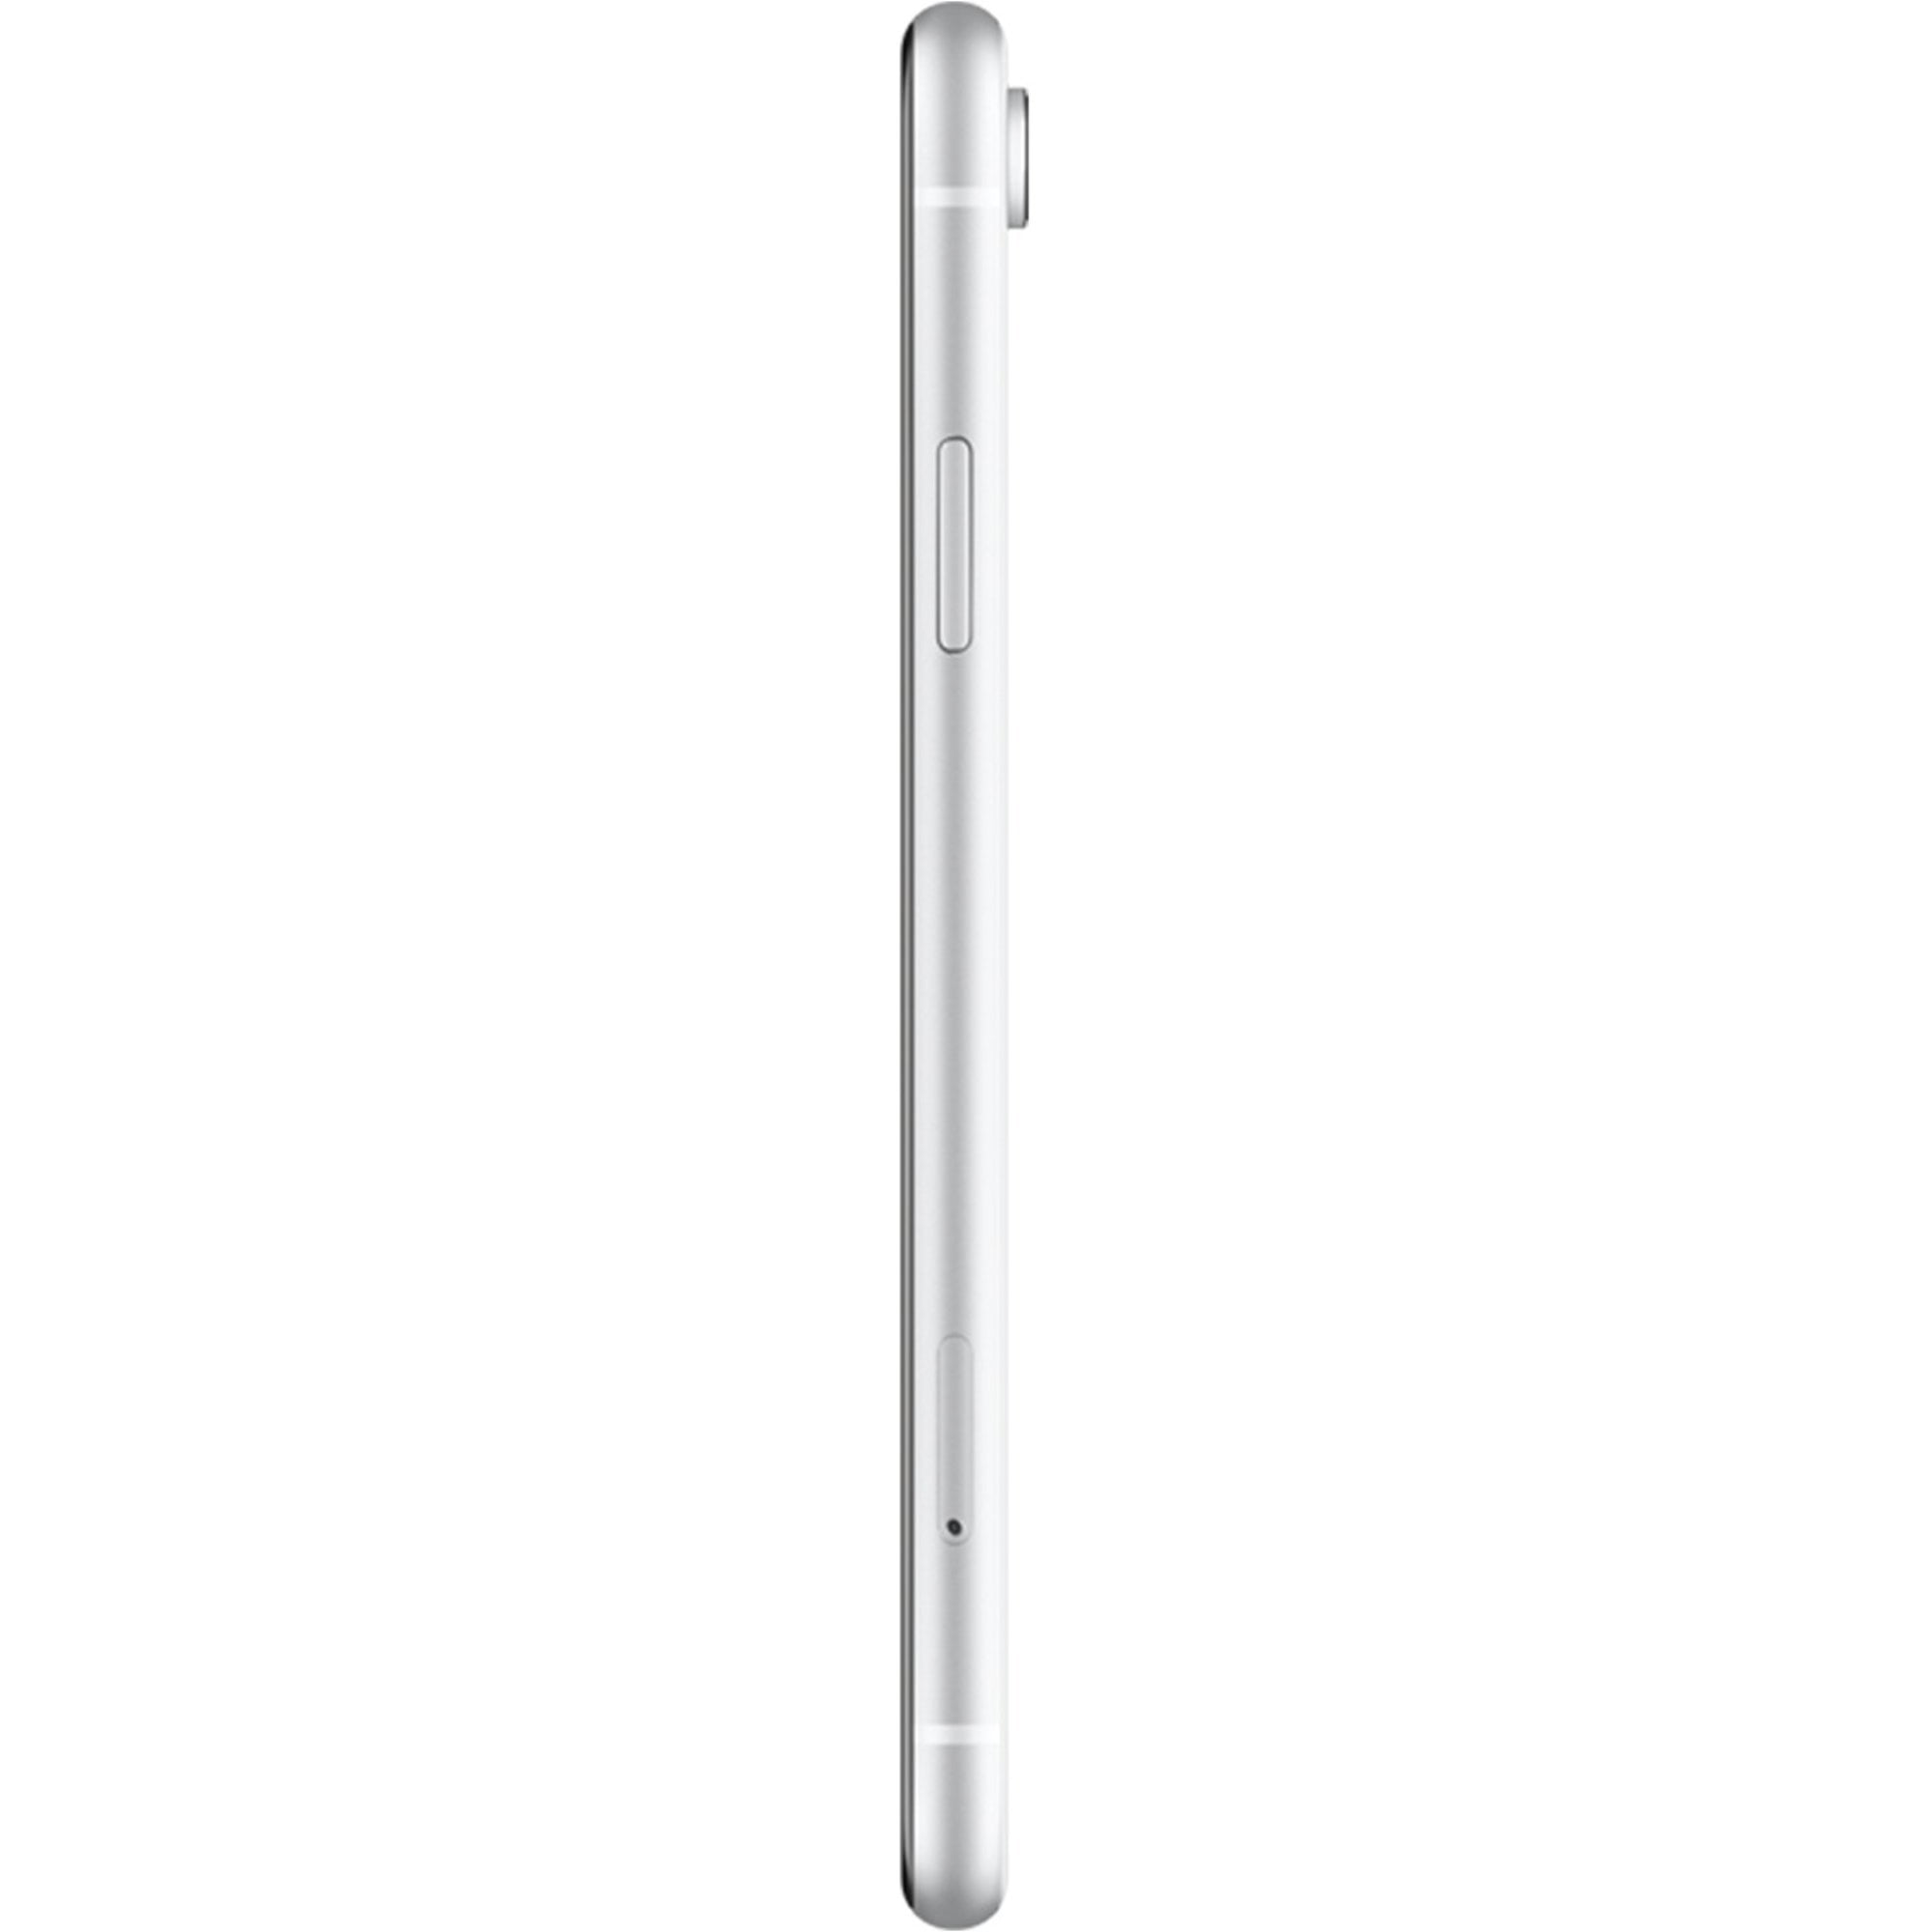 Apple iPhone XR 128GB Fully Unlocked (Verizon + Sprint + GSM Unlocked) -  White (Certified Used)